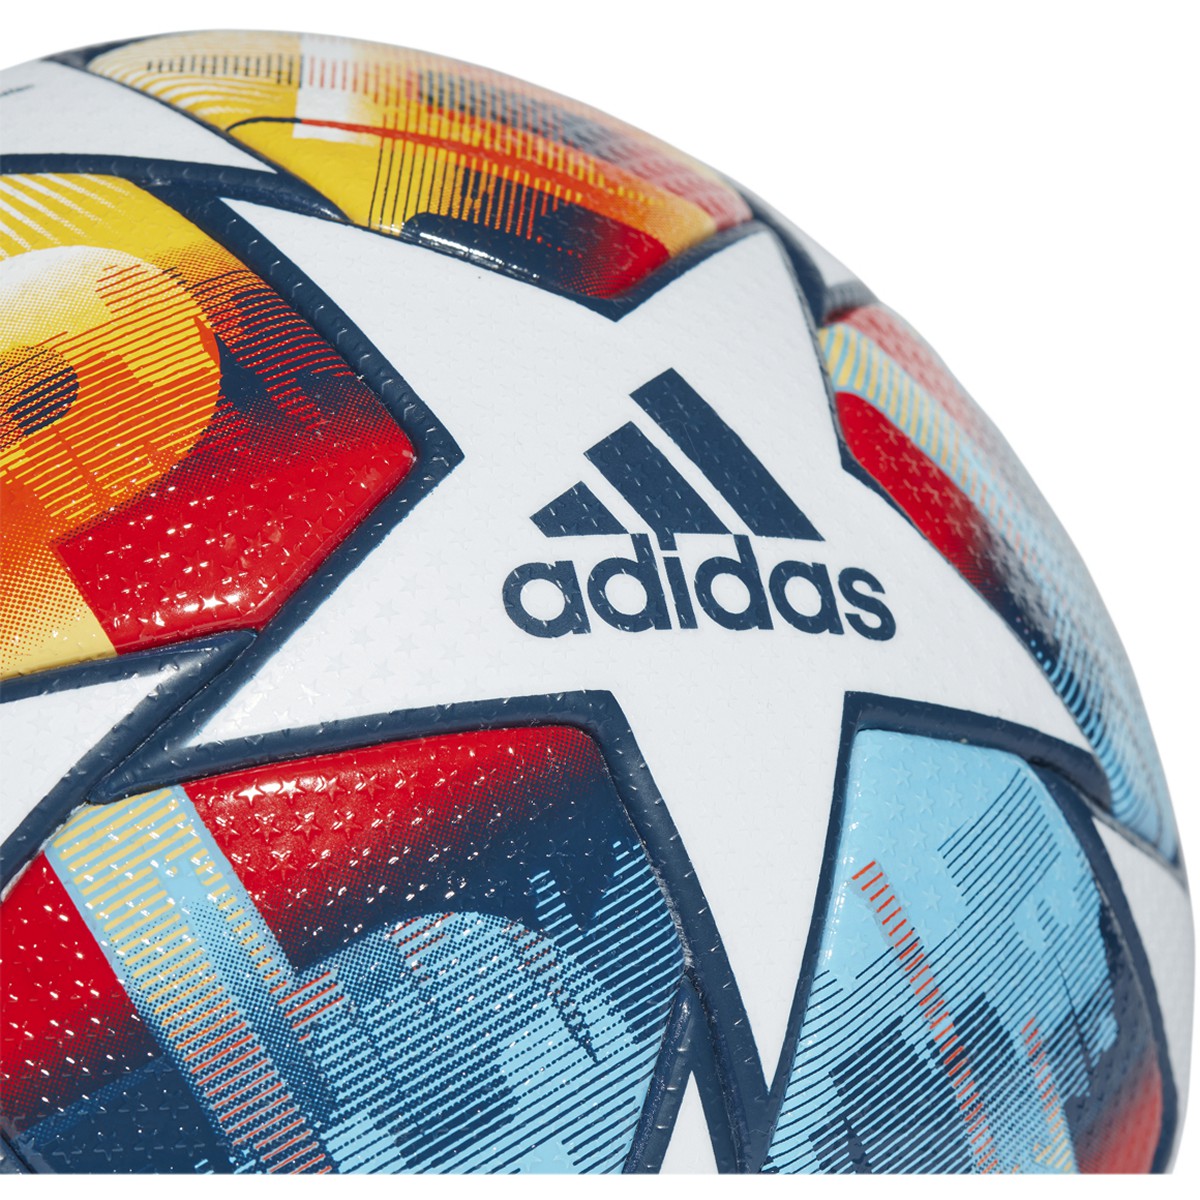 Adidas Ball Final Madrid J350 Champions League 2018/19 Color Red Taglia  Palloni 5